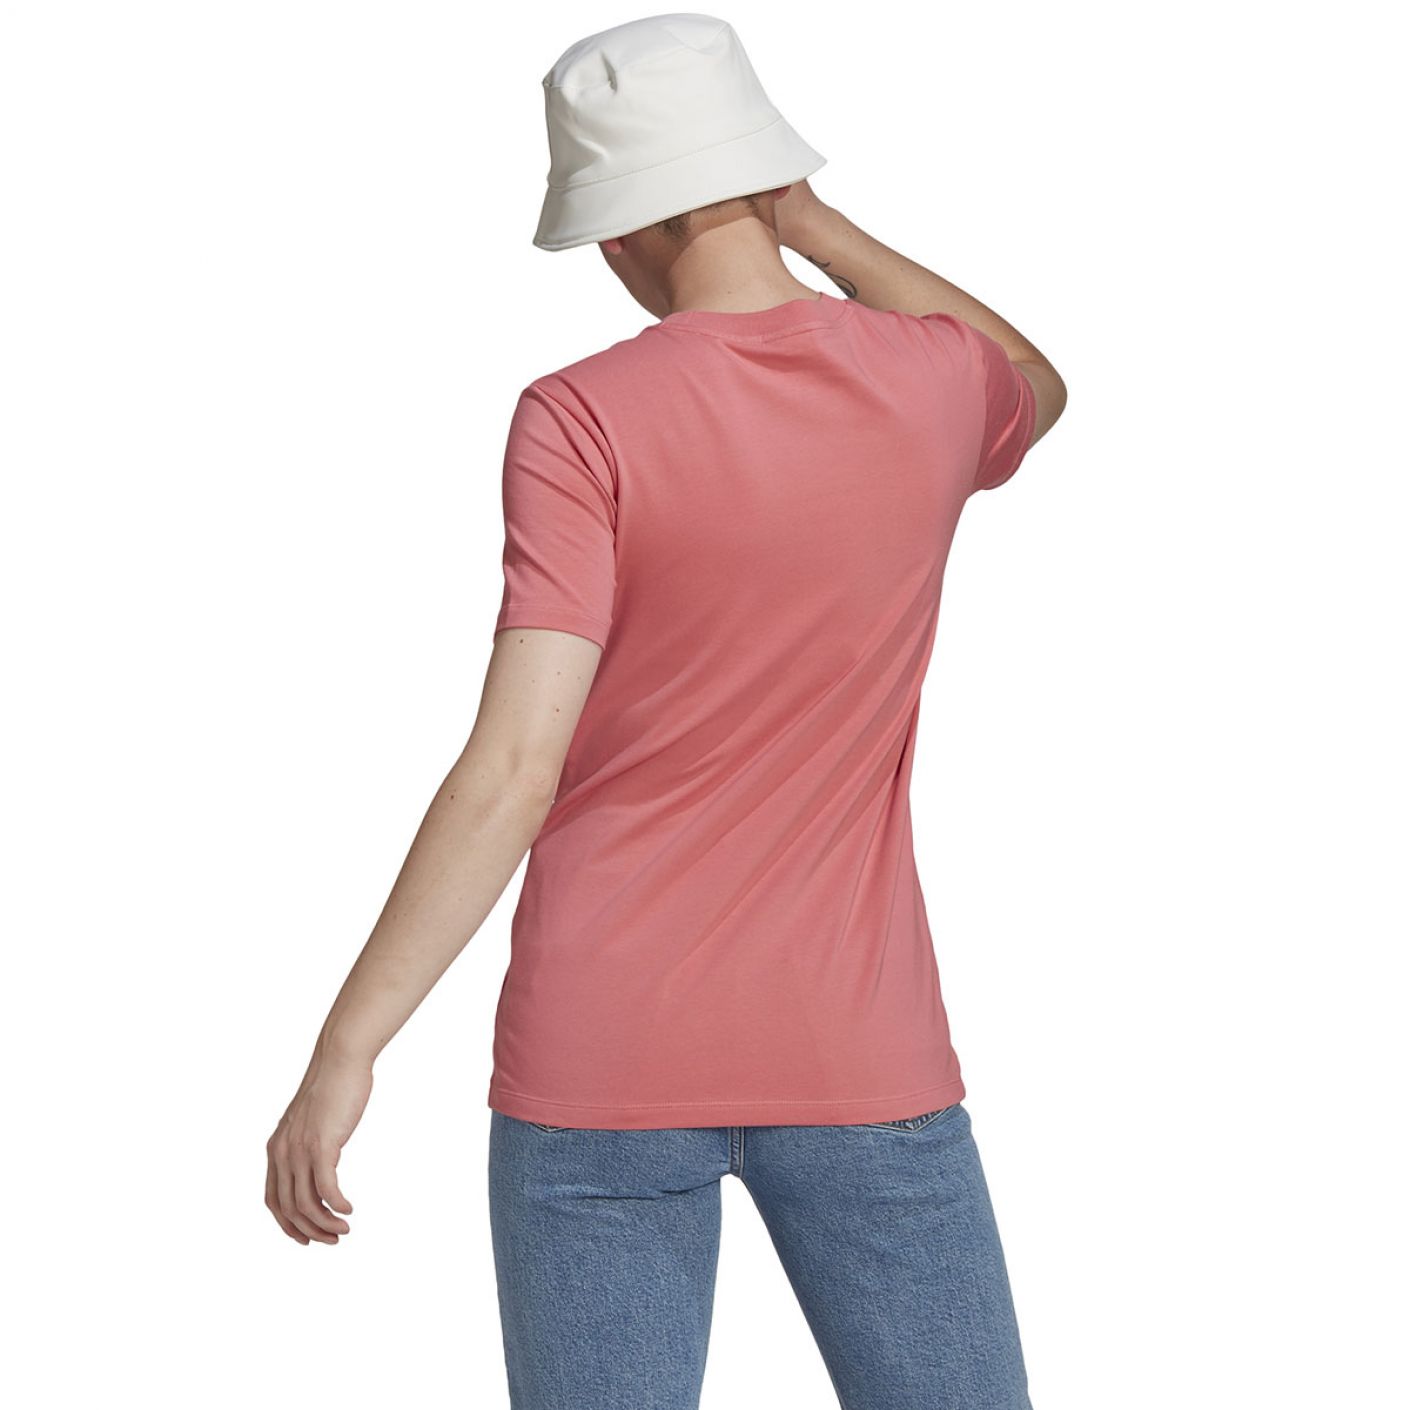 Adidas Women's Trefoil Hazy Rose T-shirt